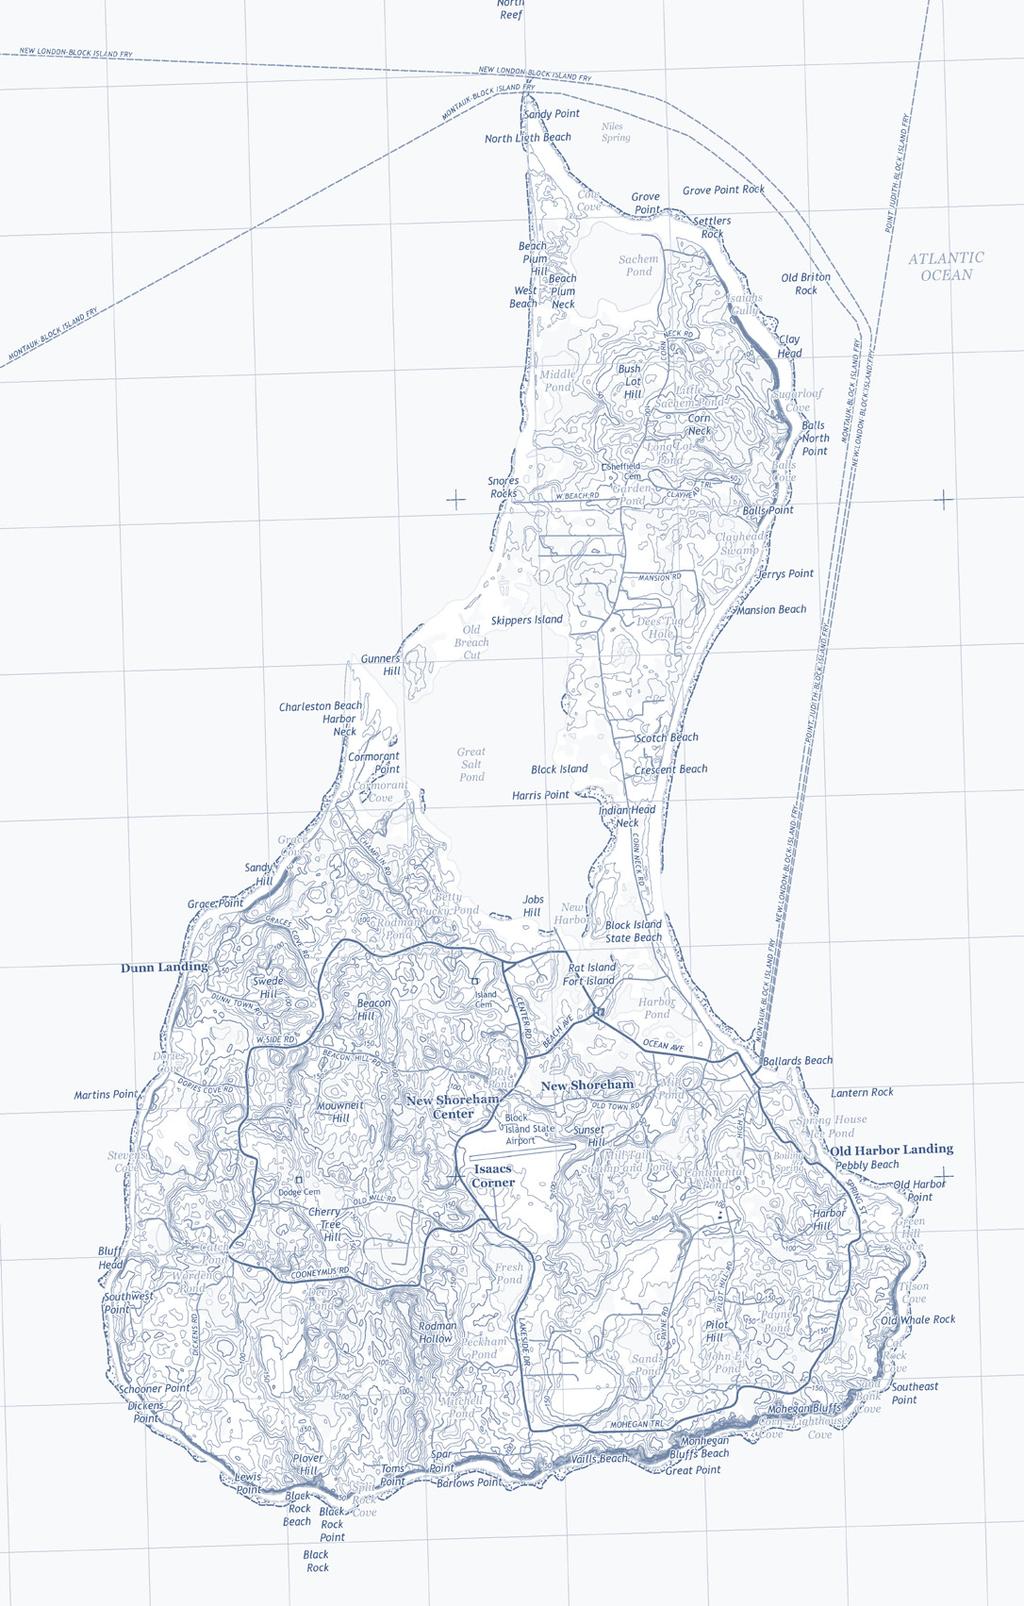 Block Island Block Island is located in the Atlantic Ocean 13 miles south of mainland Rhode Island.